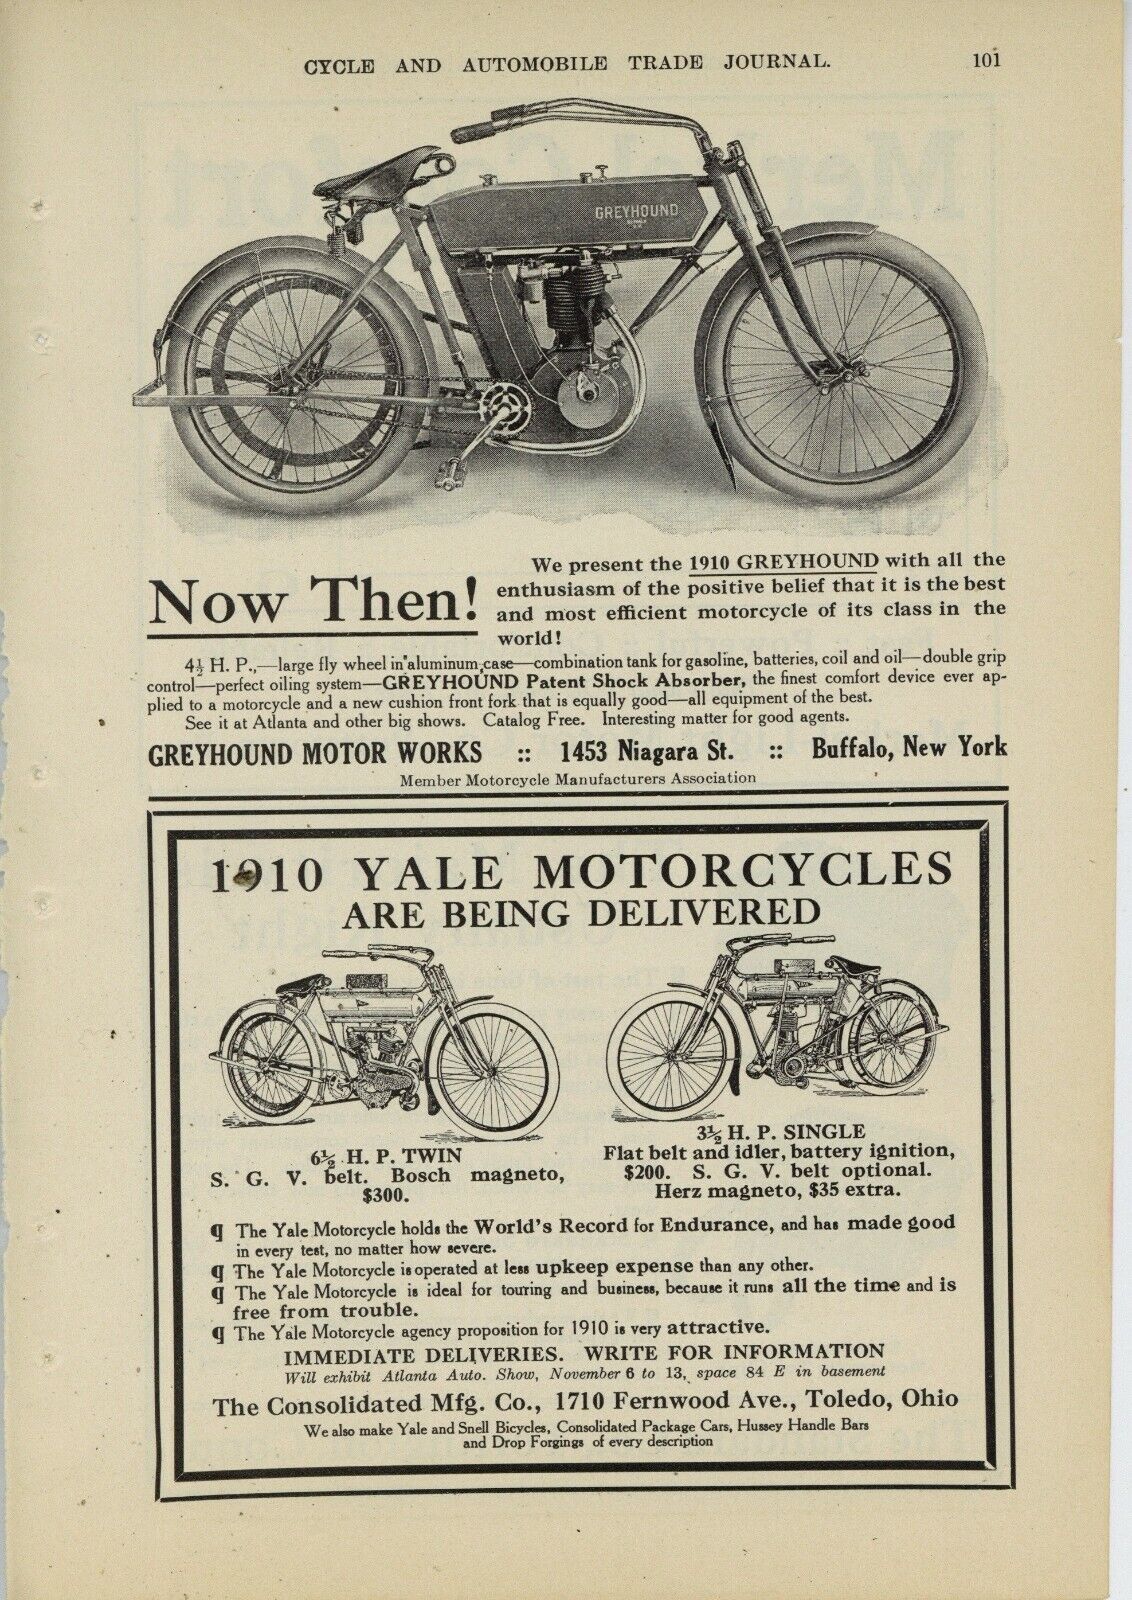 1910 Merkel Light Motor Ad: Merkel Motorcycles  Pottstown, PA - REV is Greyhound